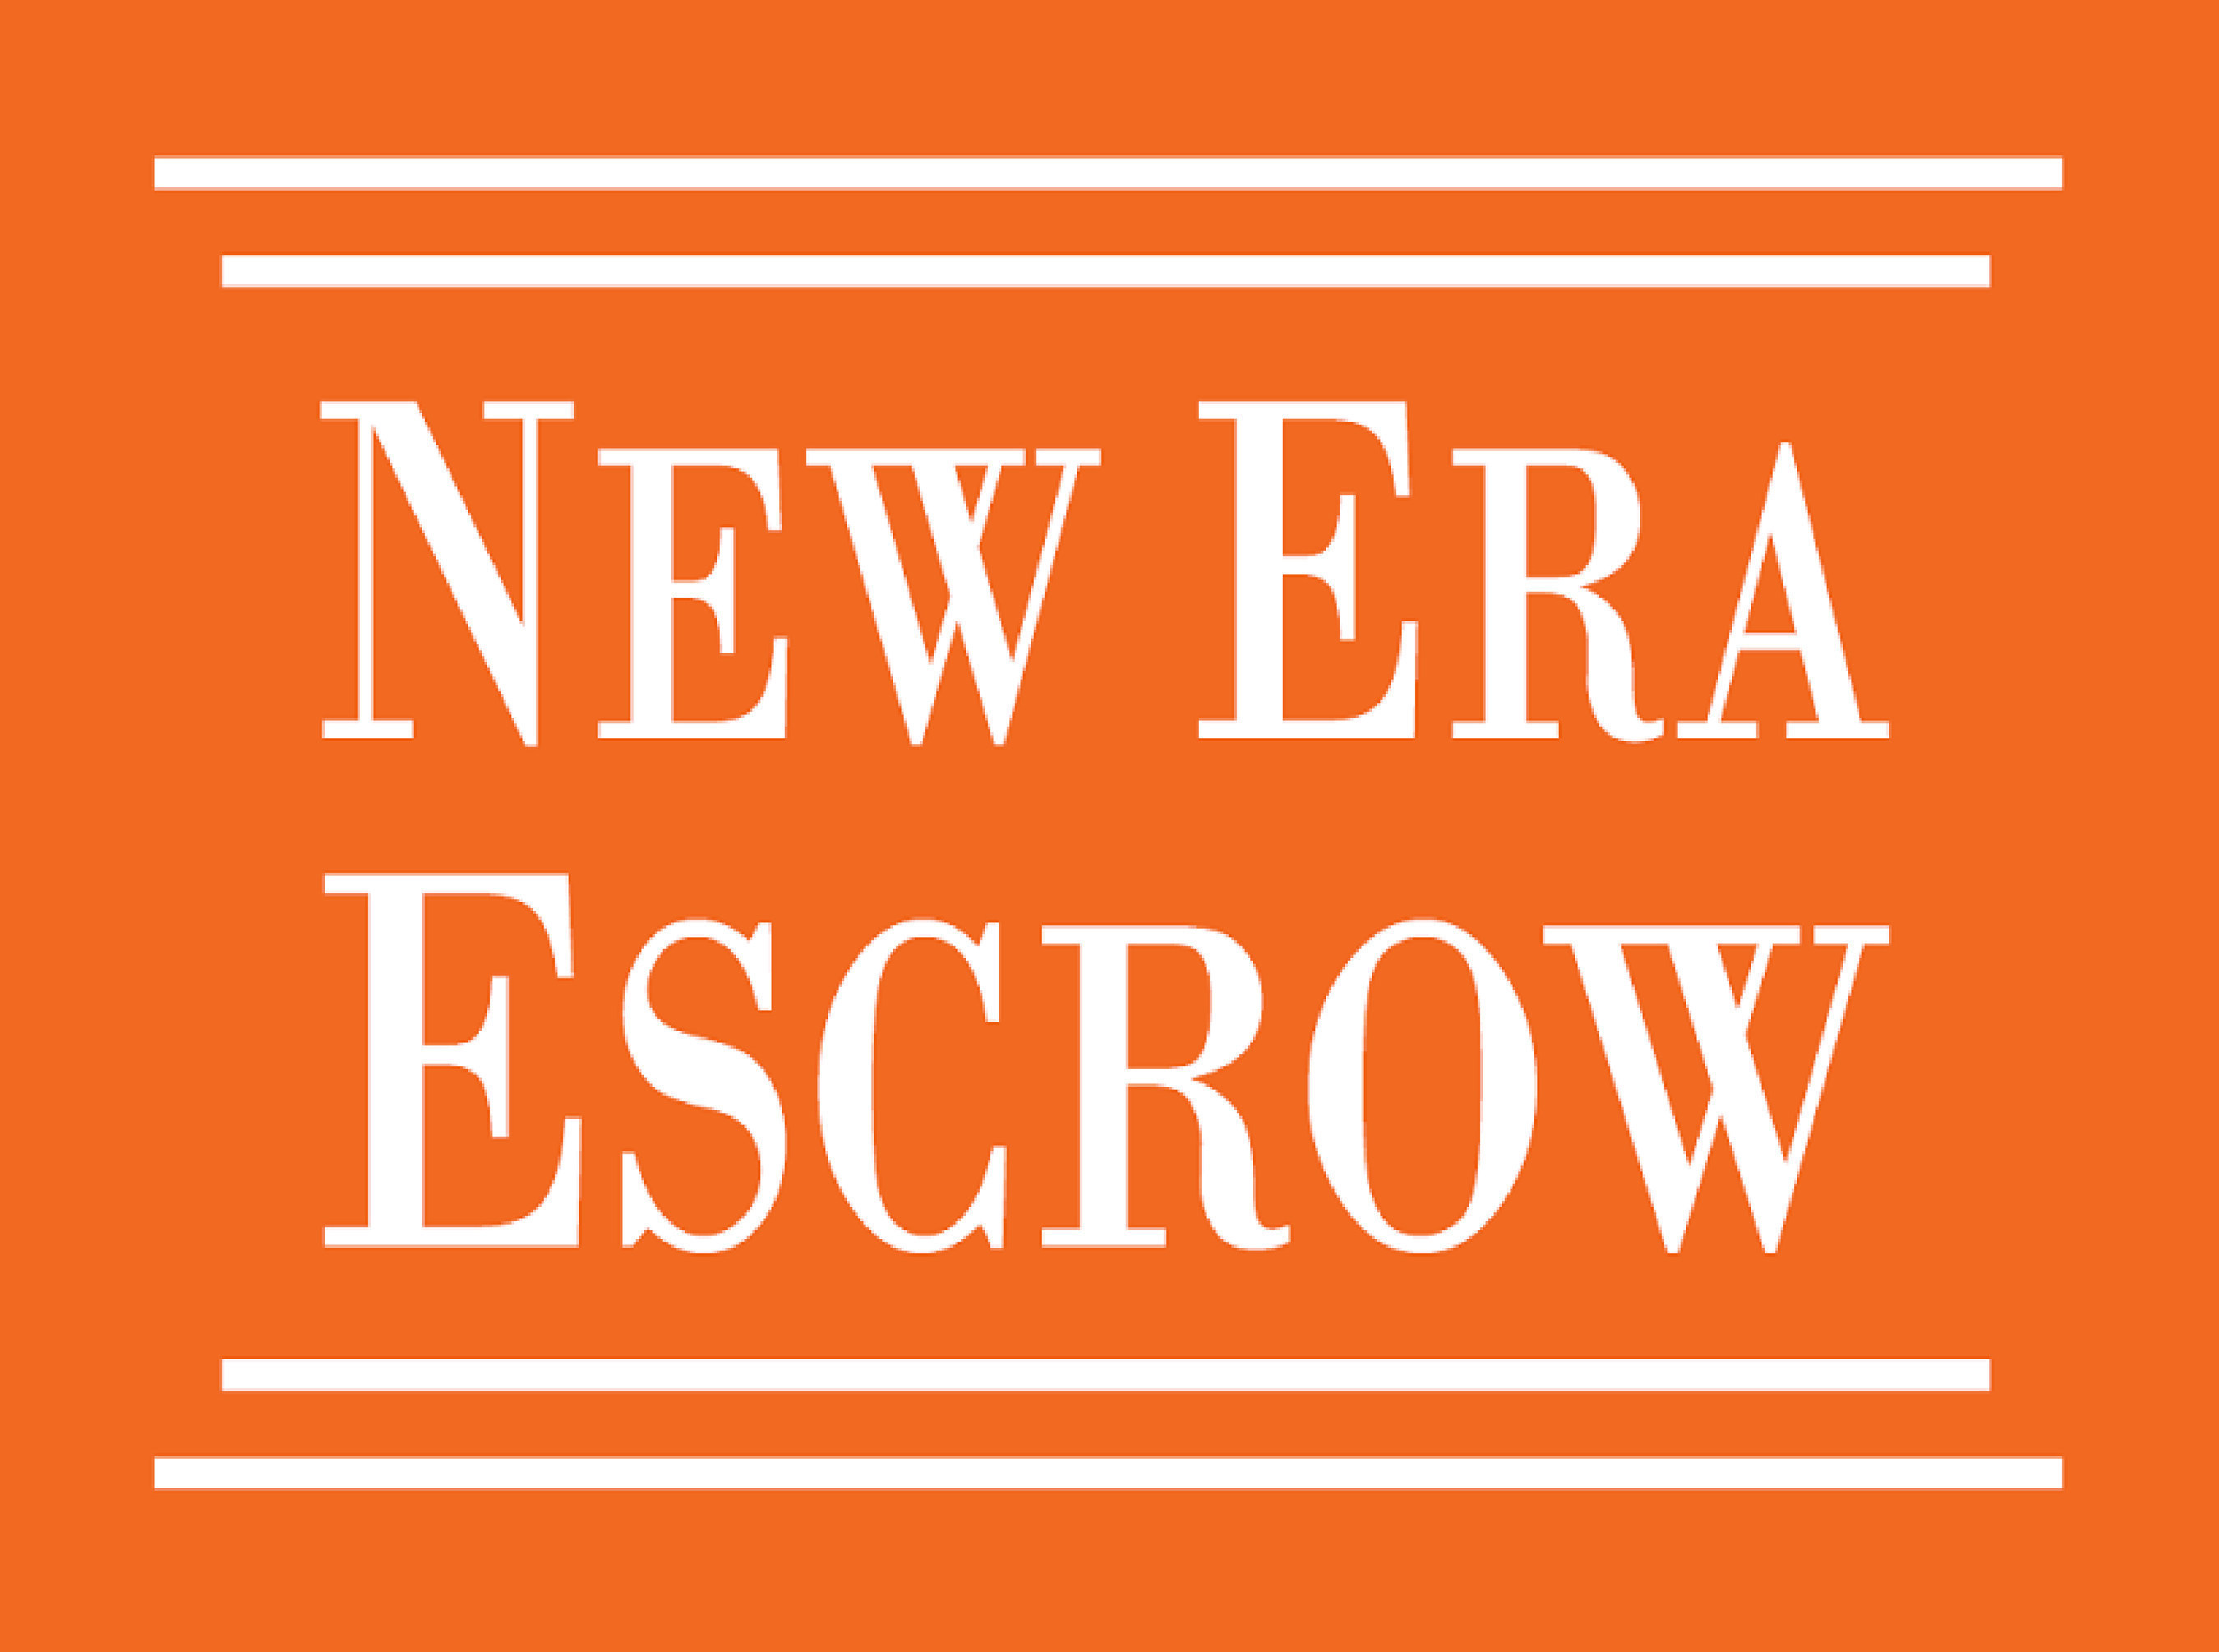 New Era Escrow logo.